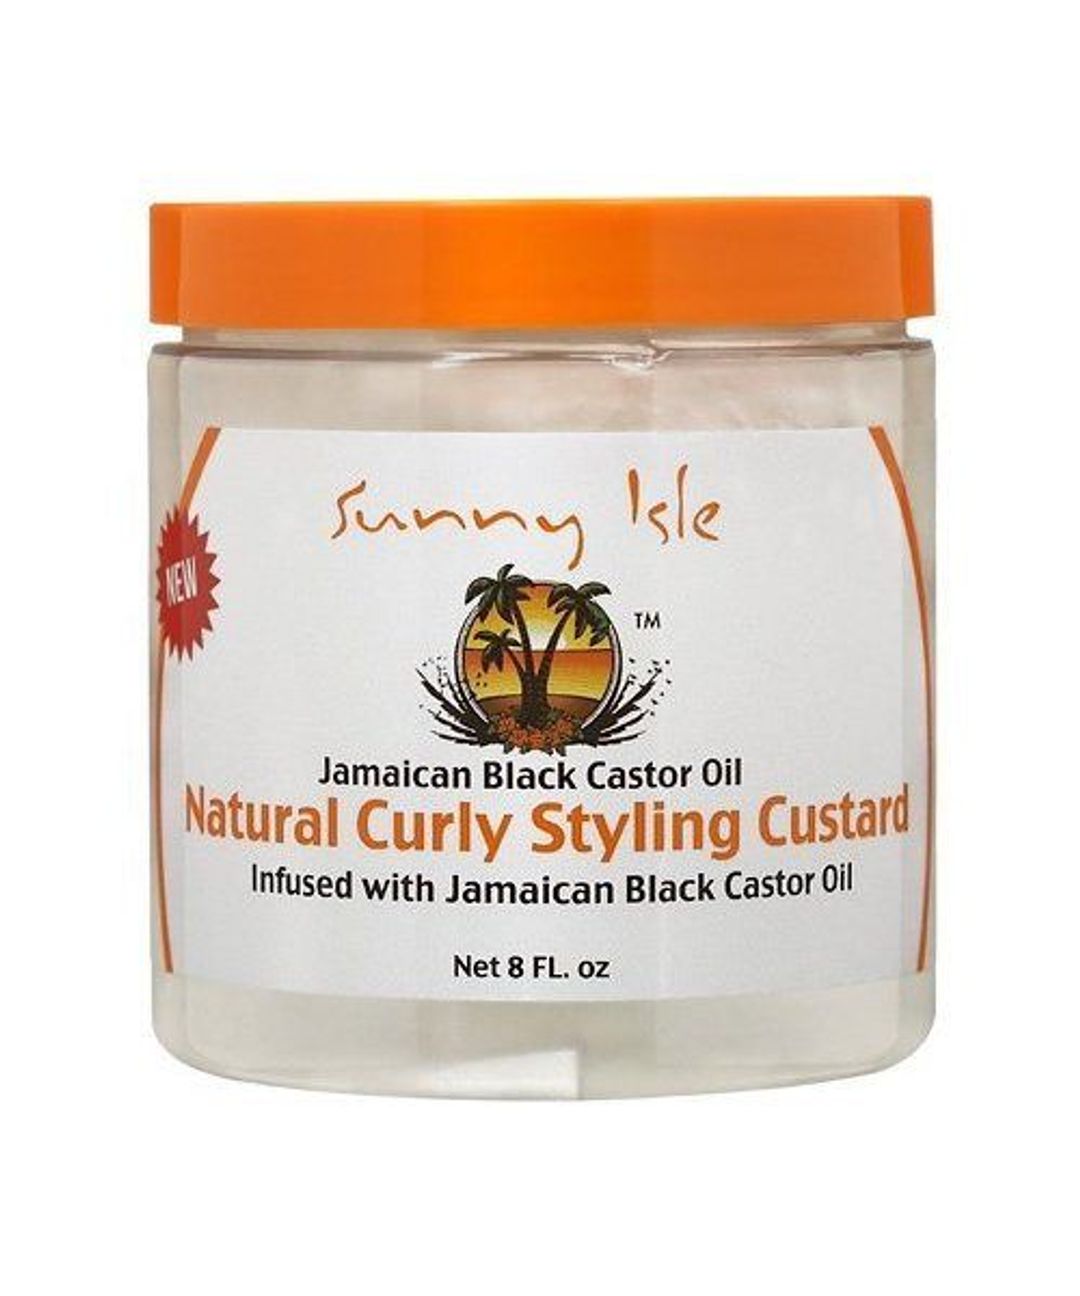 Sunny Isle Jamaican Black Castor Oil Natural Curly Styling Custard - 8oz